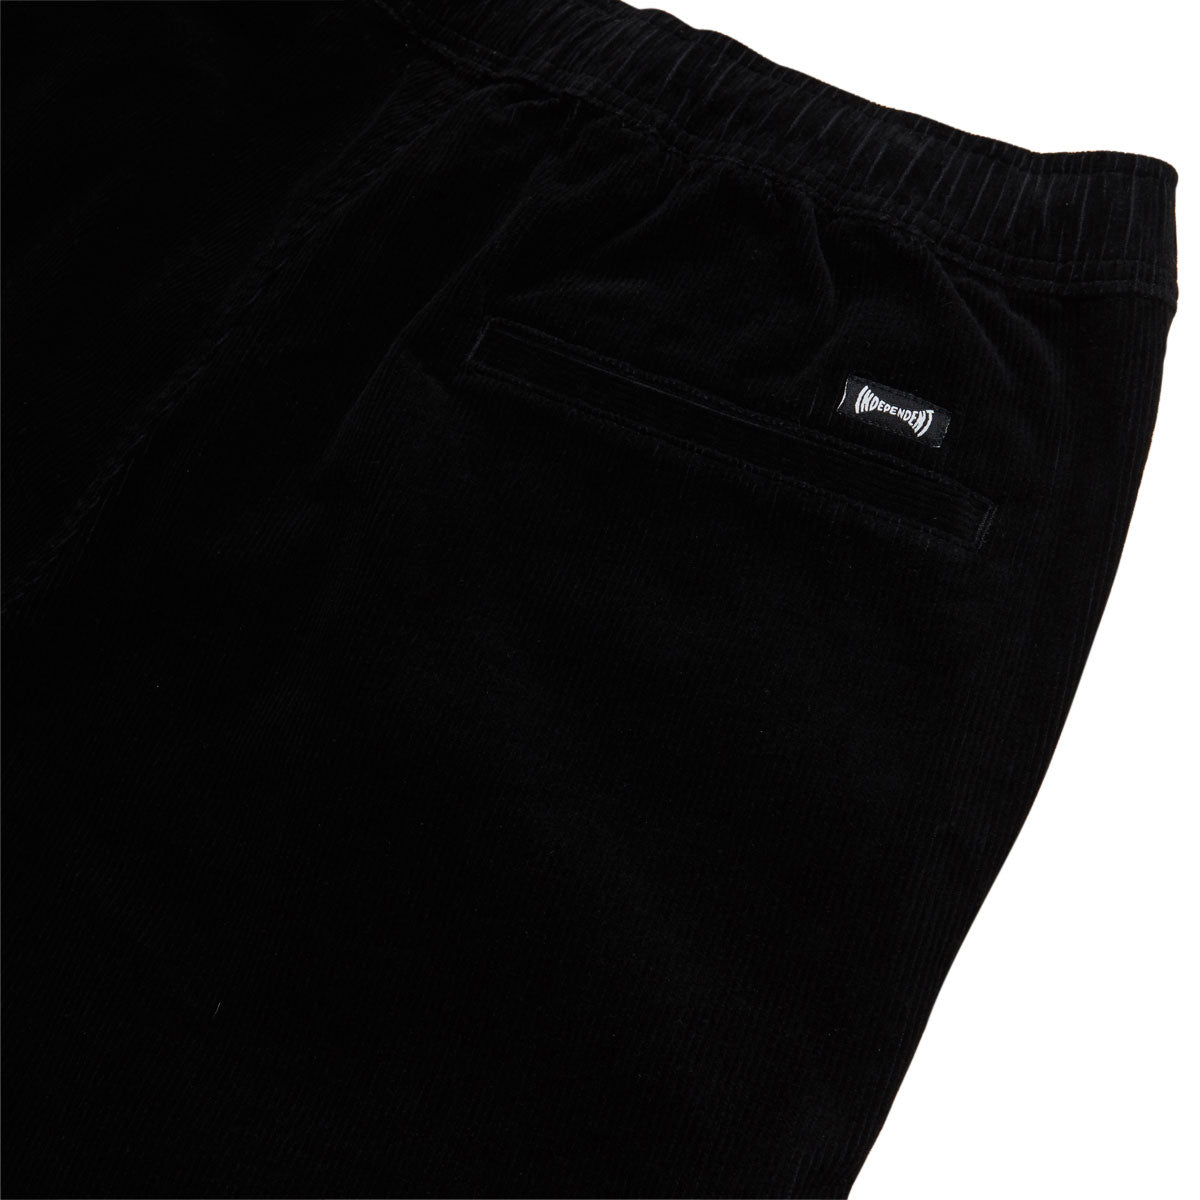 Independent Span Skate Corduroy Chino Pants - Black image 4